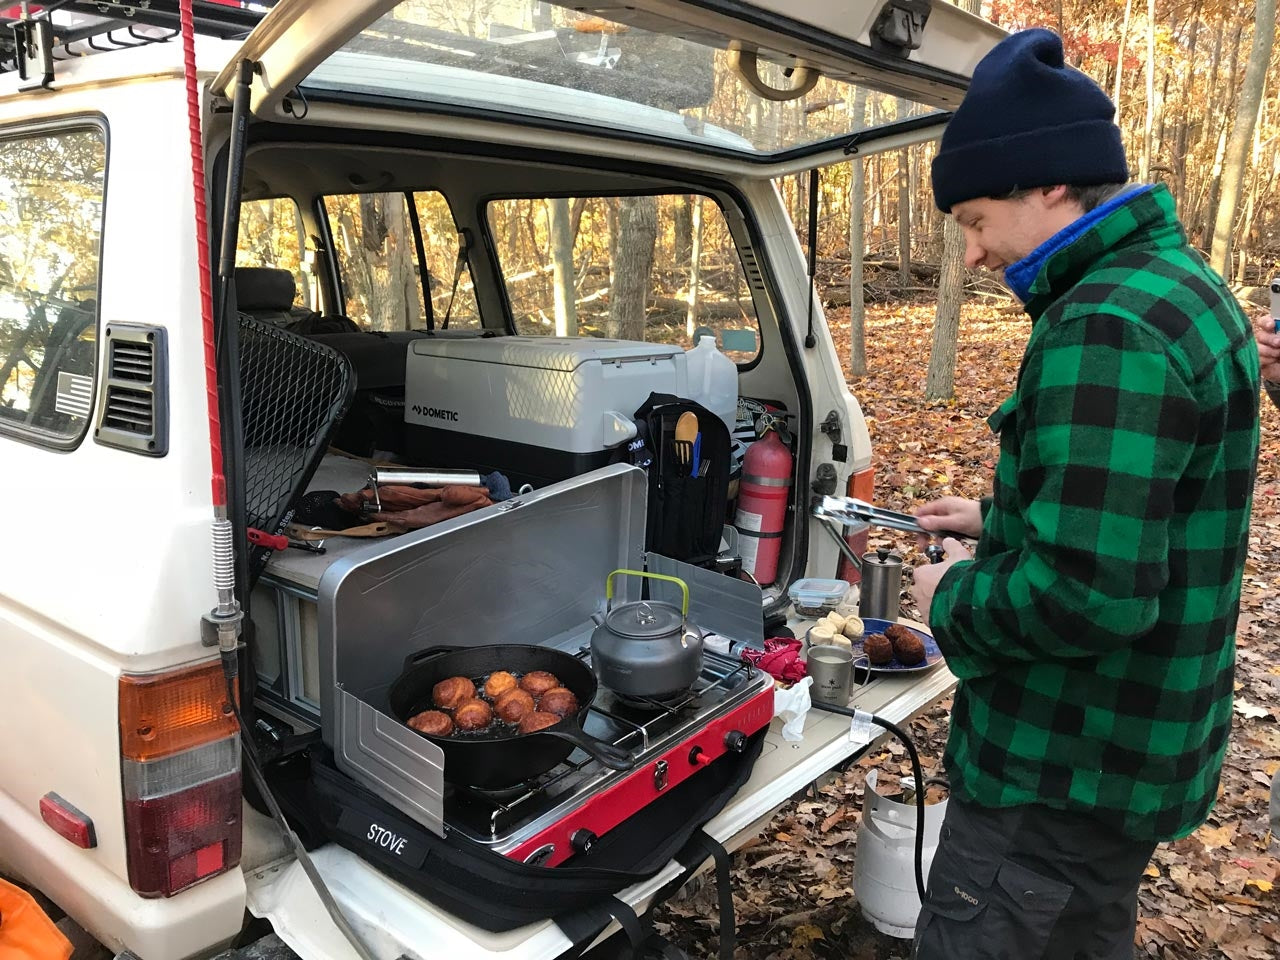 Camp Cooking Utensils 4-Pack – Blue Ridge Overland Gear